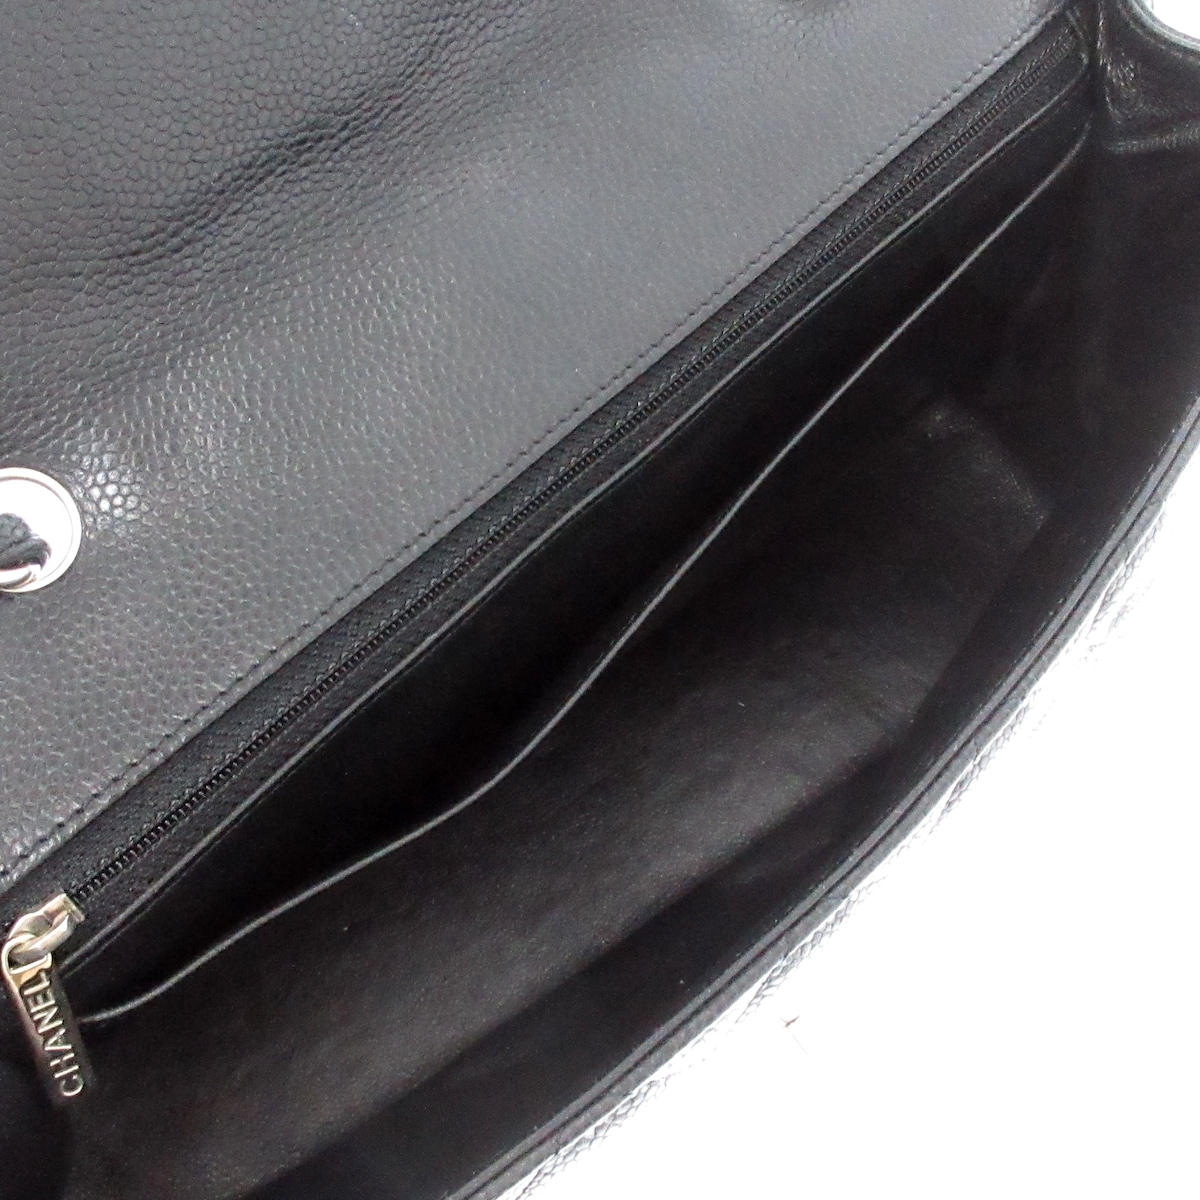 Chanel Black Leather Medium Classic Single Flap Bag